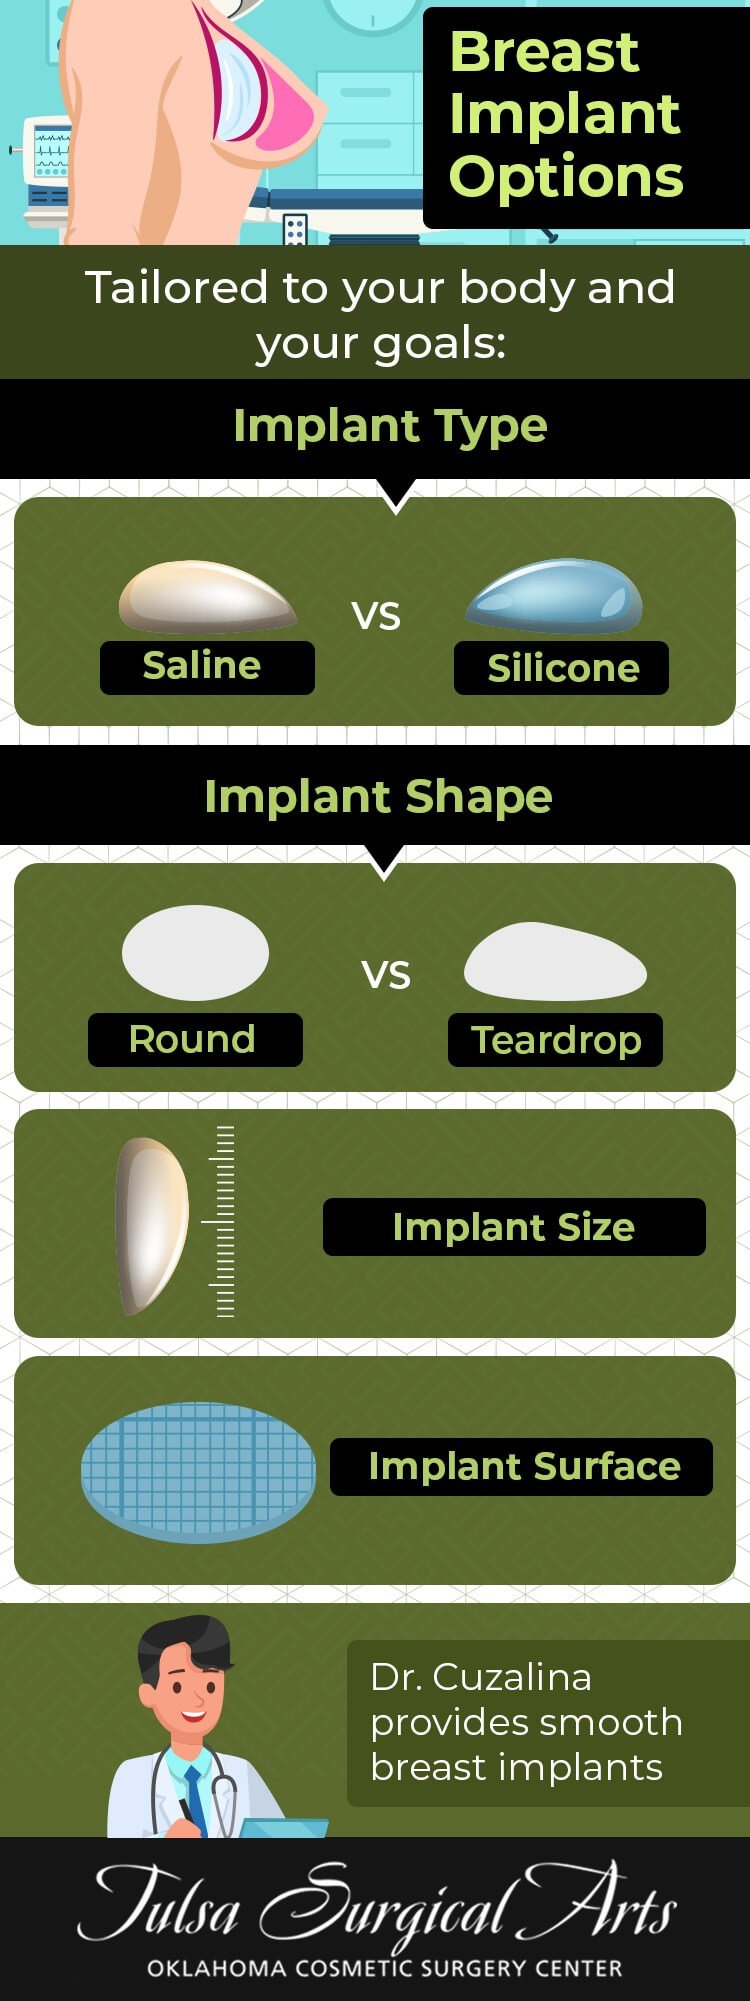 Breast Implant Options